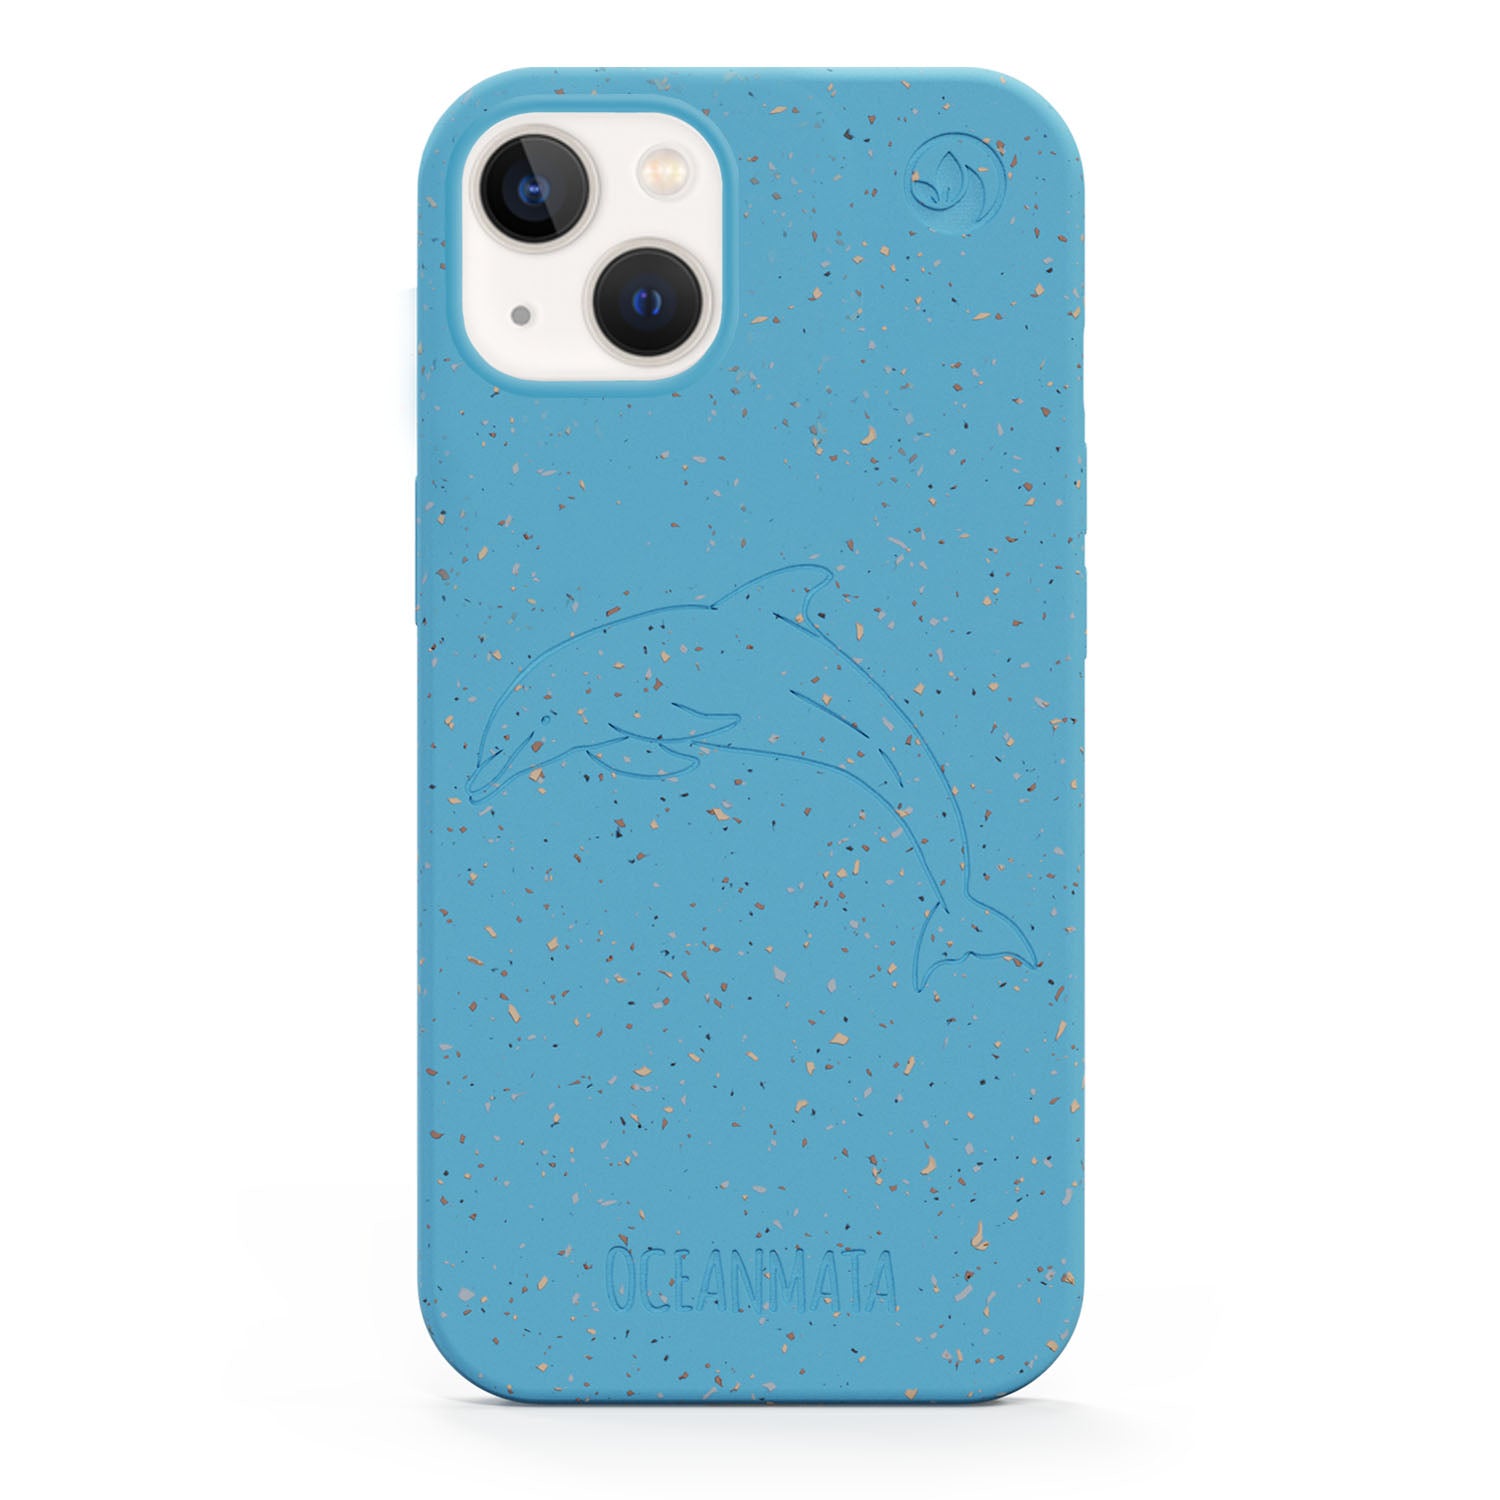 nachhaltige Apple iPhone Hülle "Dolphin Edition"